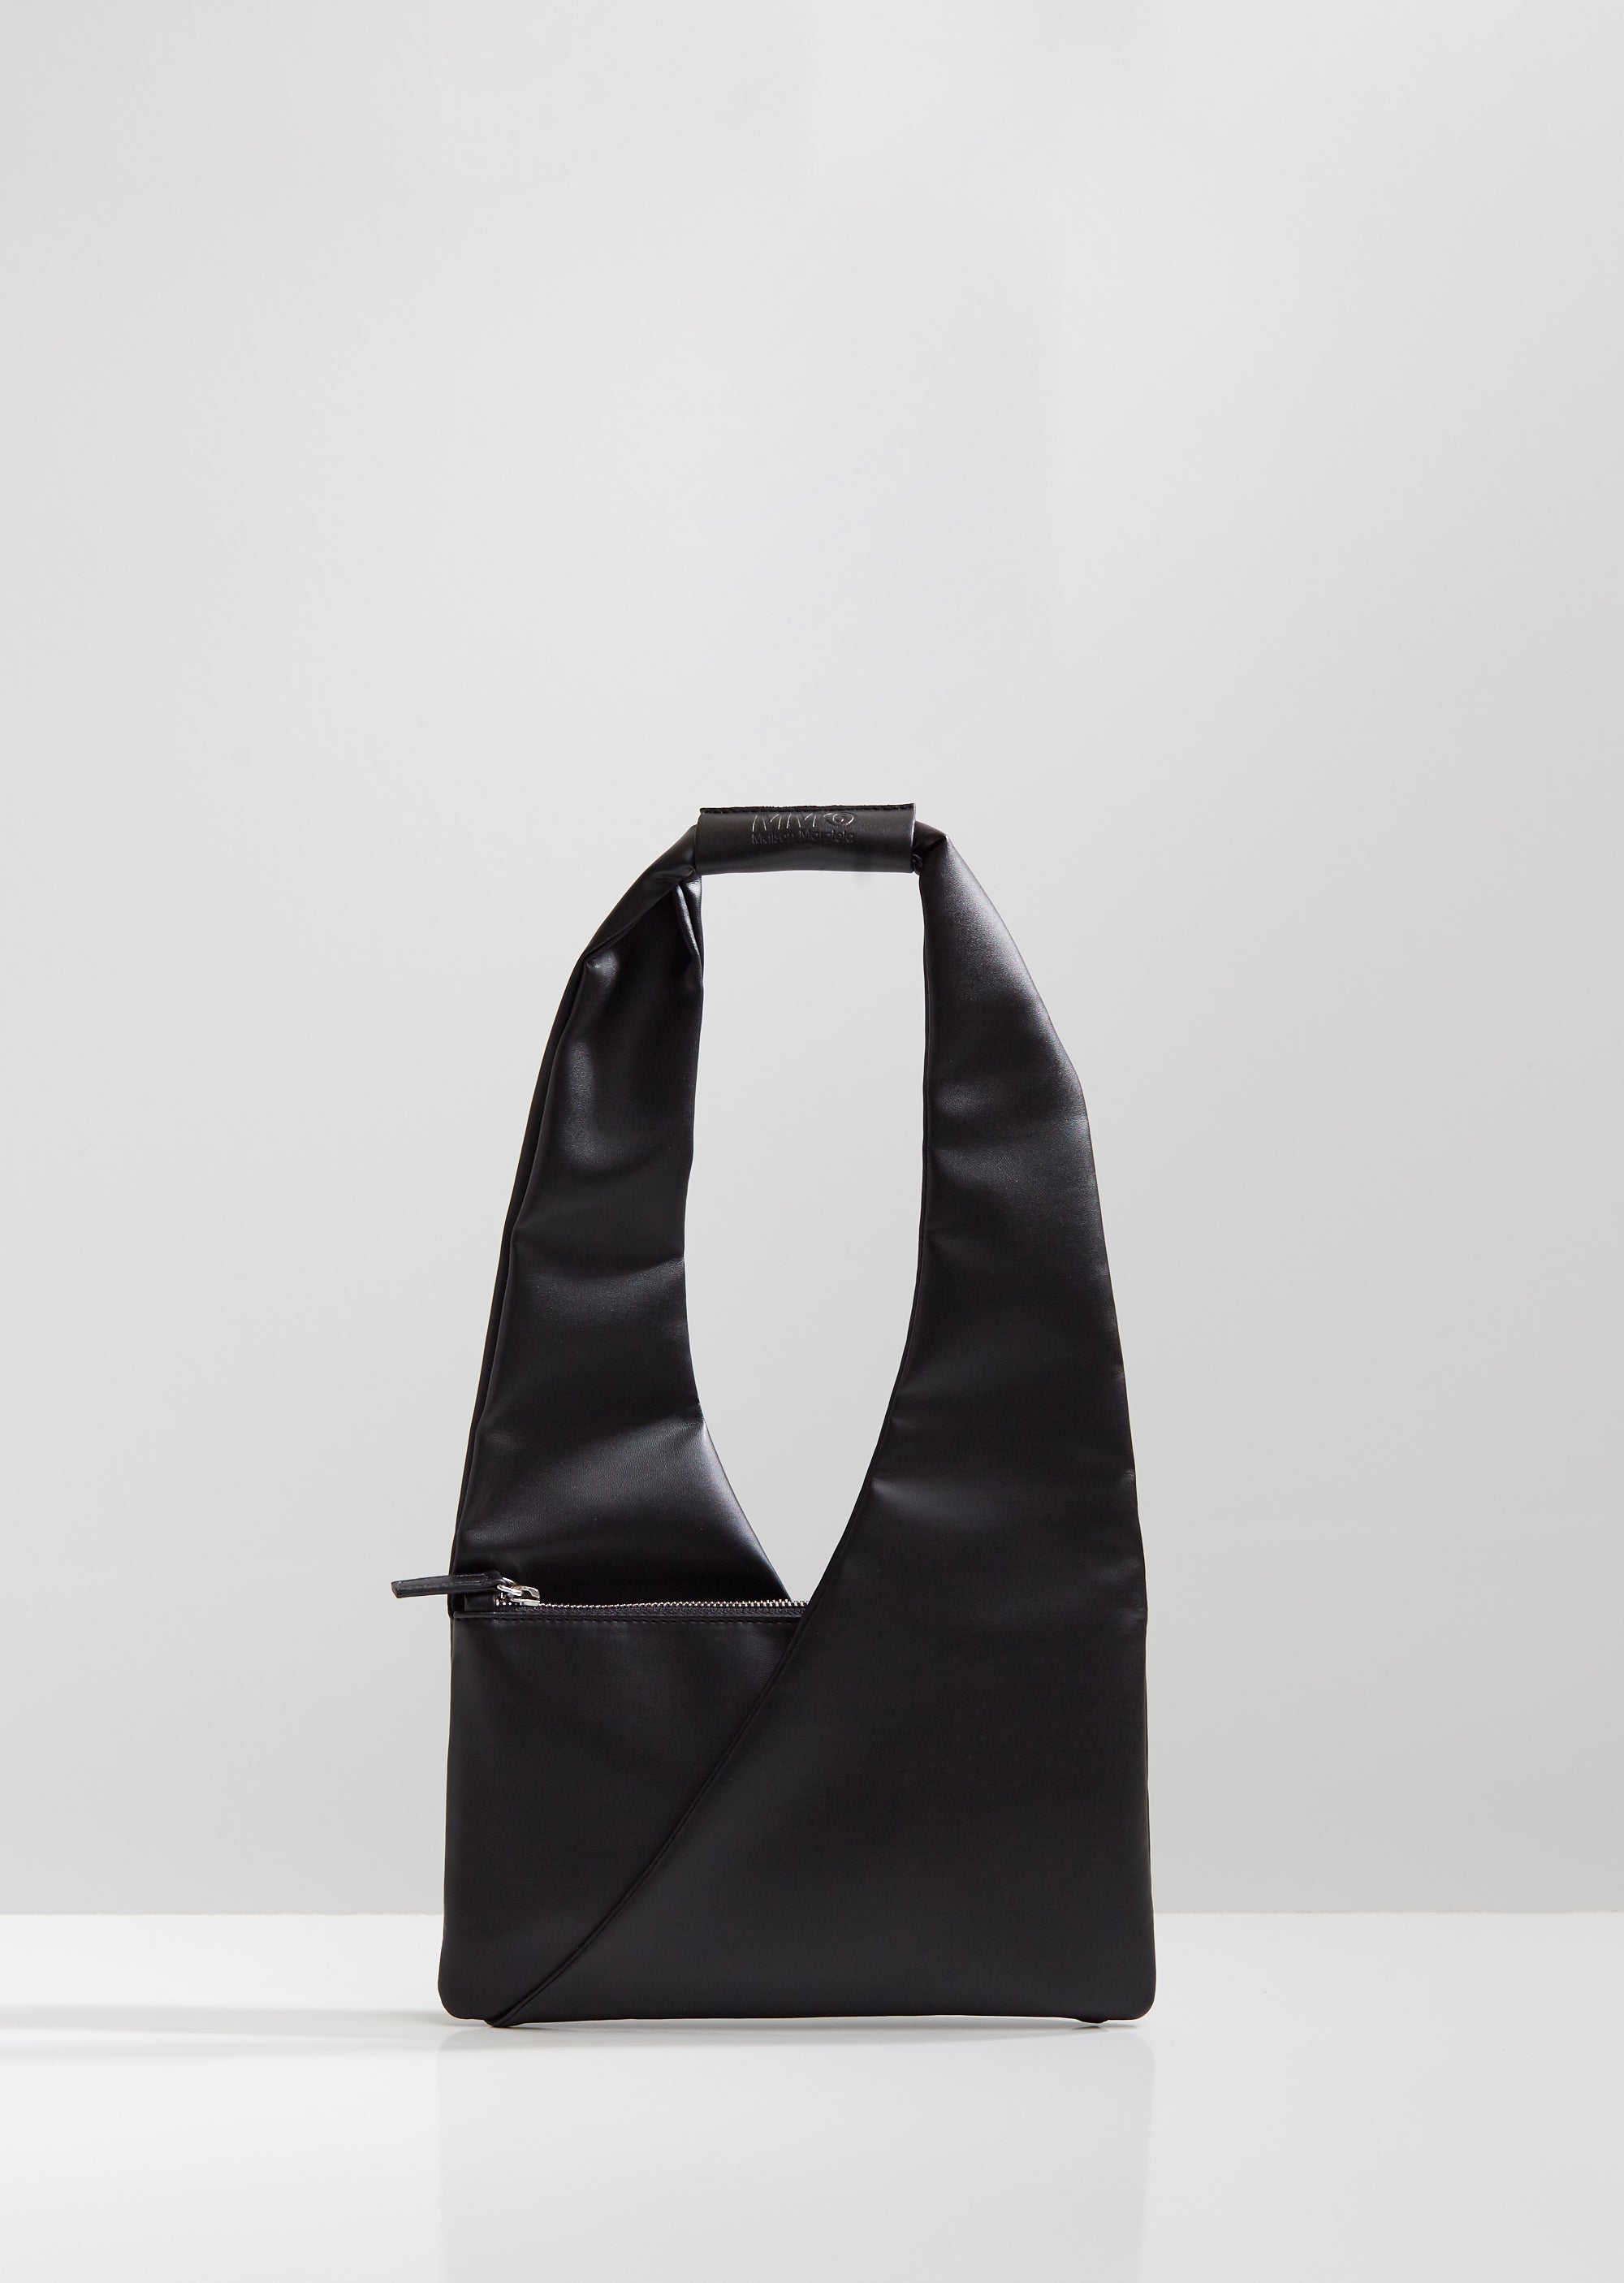 MM6 Maison Margiela Japanese Bag Black